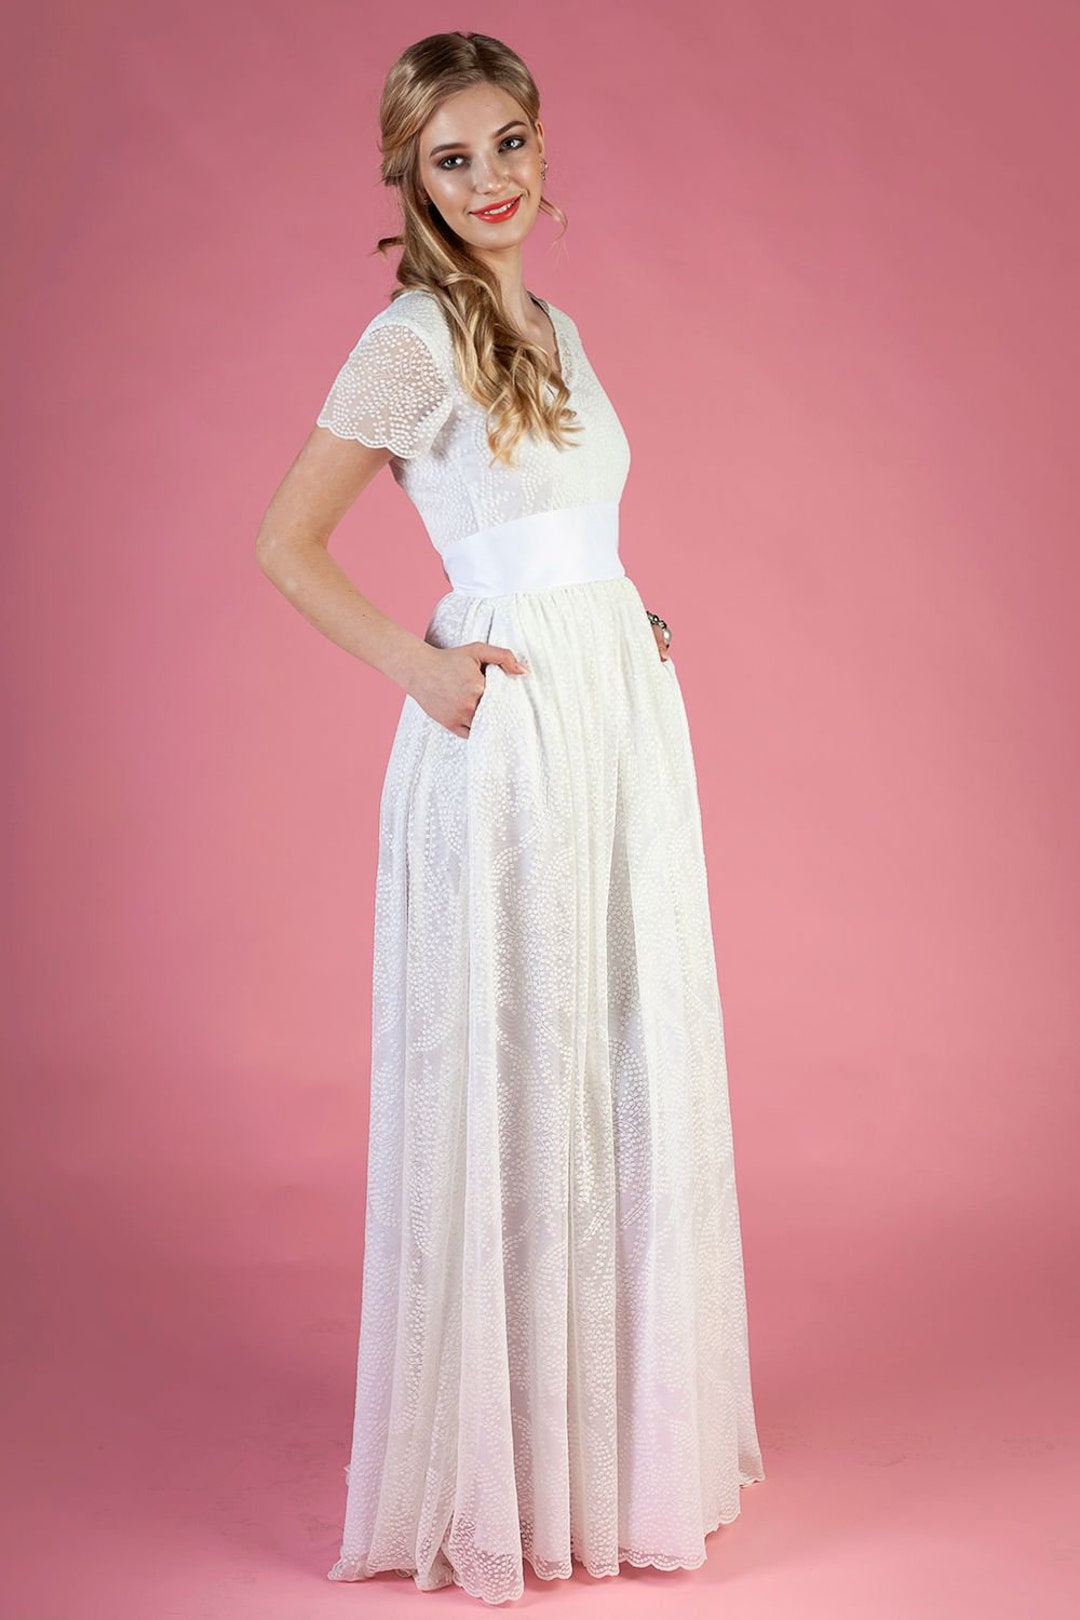 Lace Maxi Dress White Wedding Dress Lace Dress Summer Maxi - Etsy